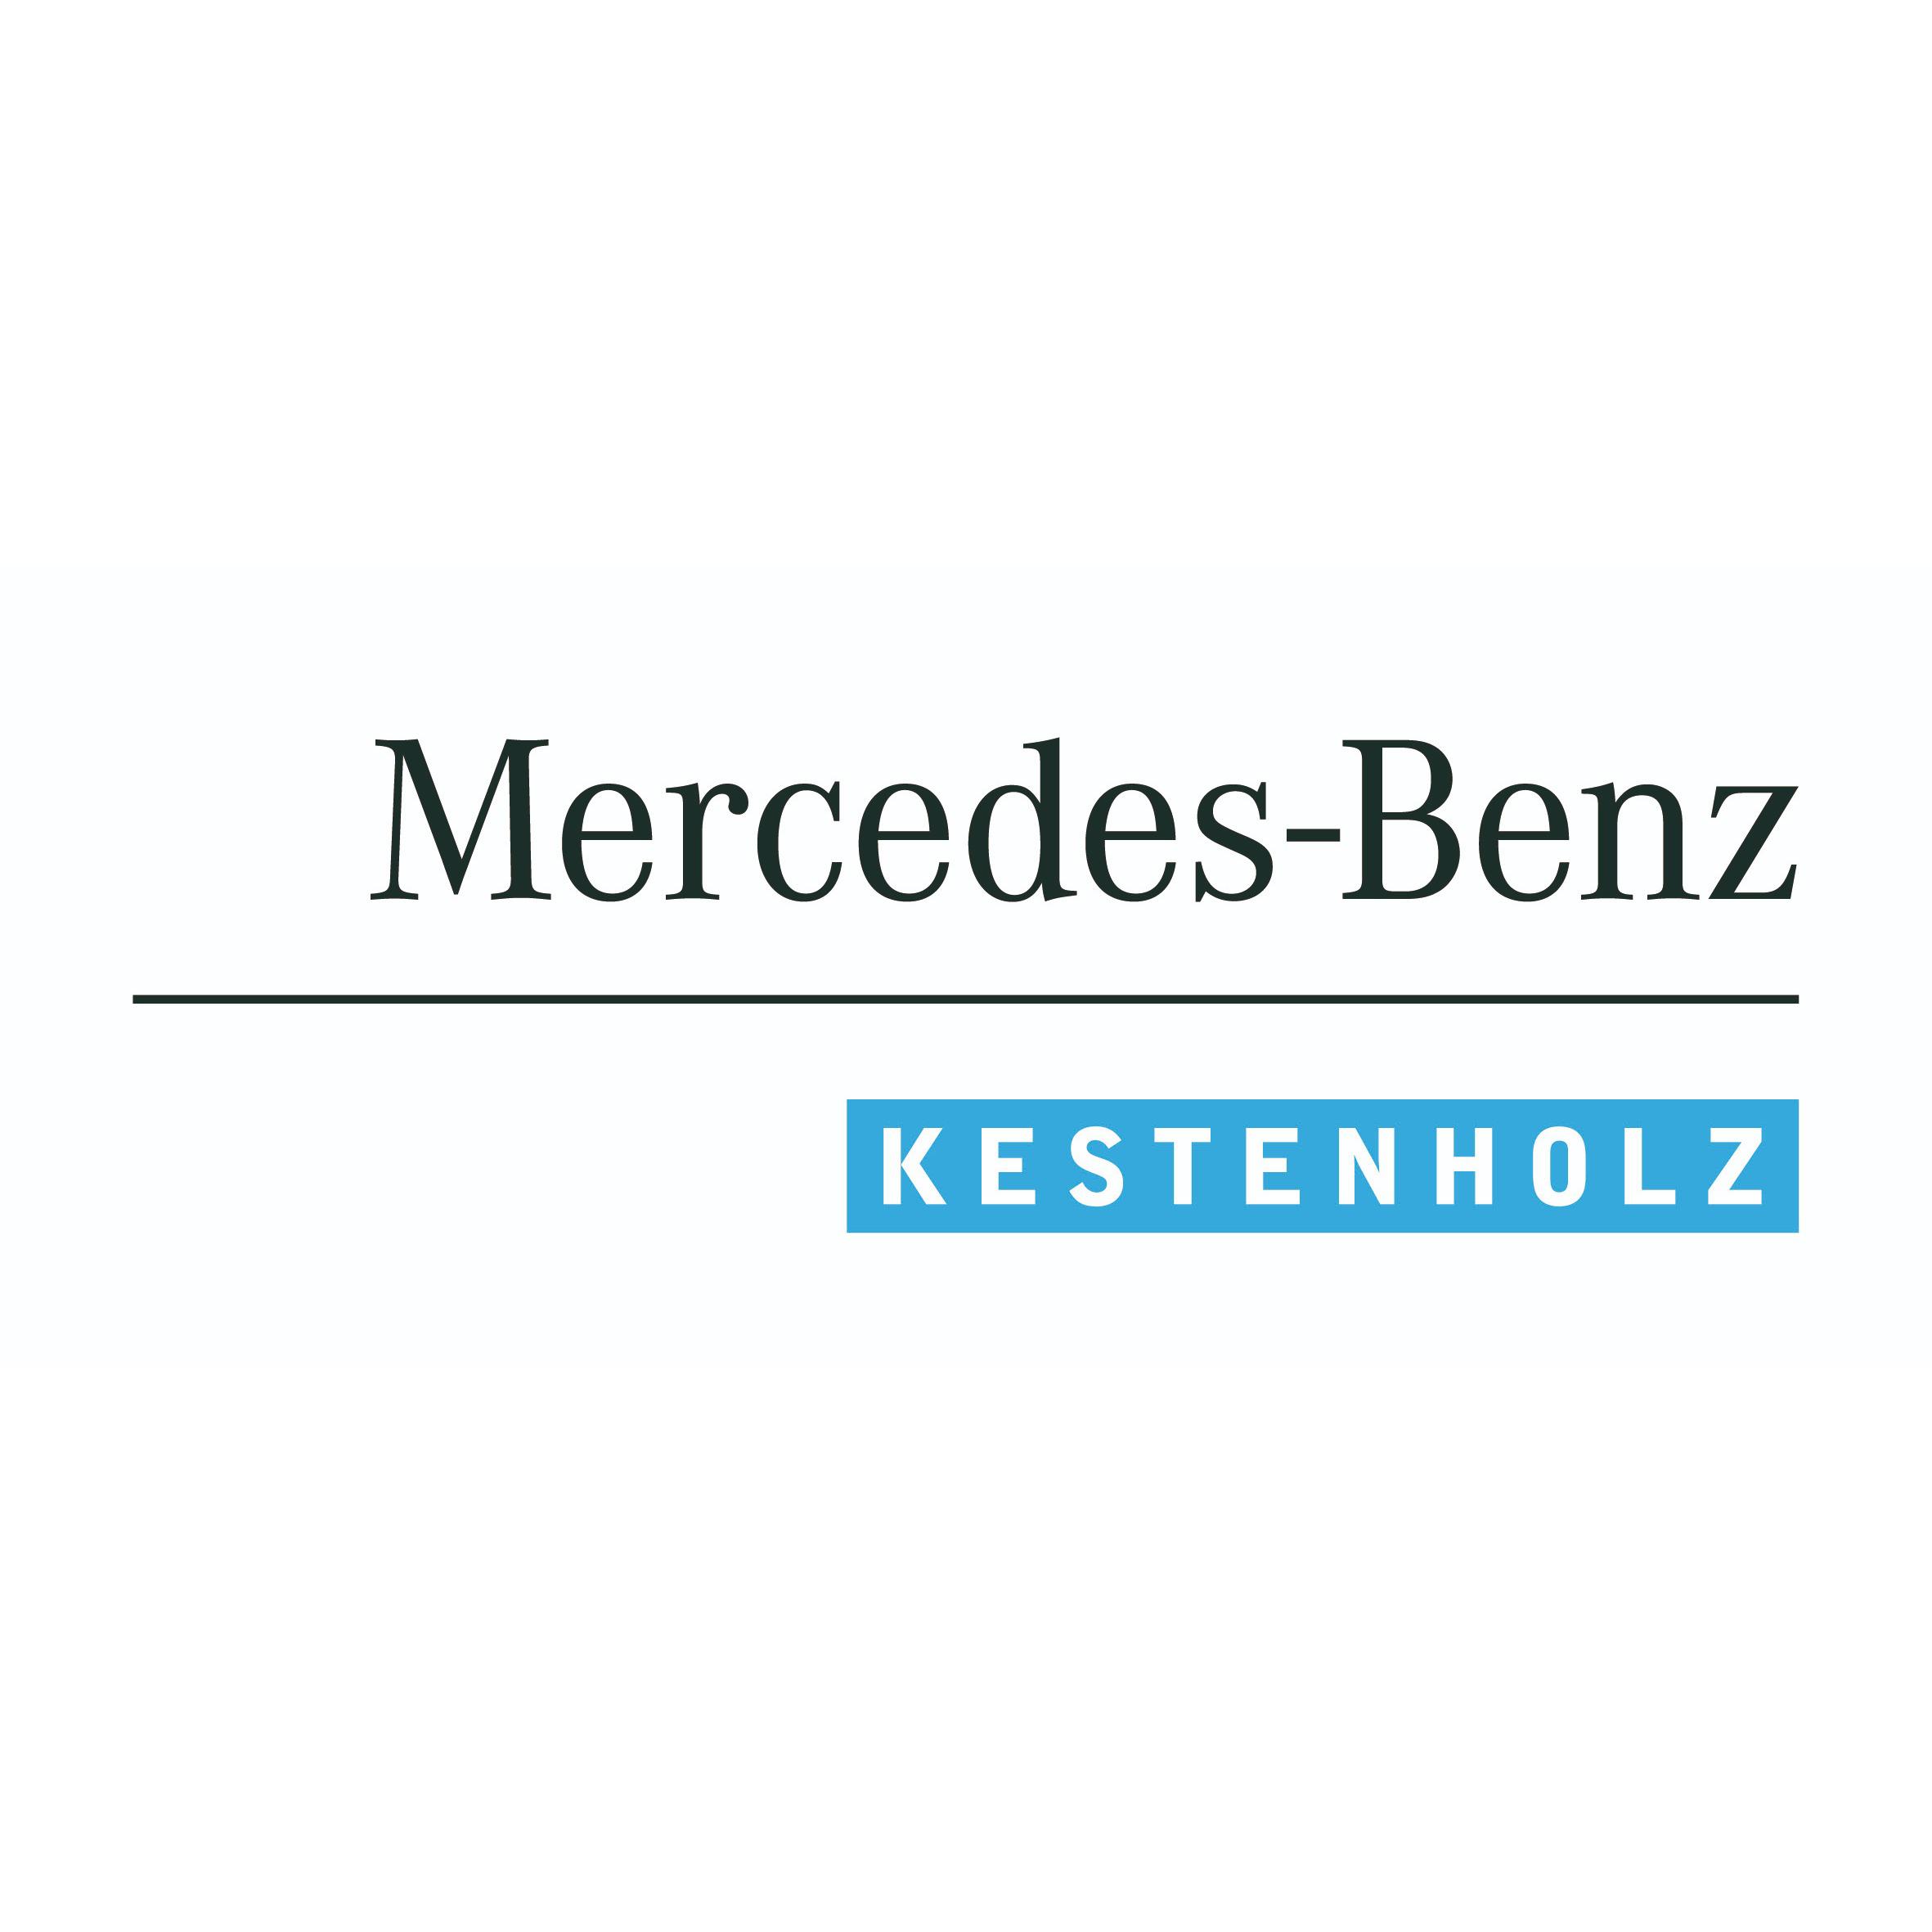 Mercedes-Benz Kestenholz Freiburg in Freiburg im Breisgau - Logo